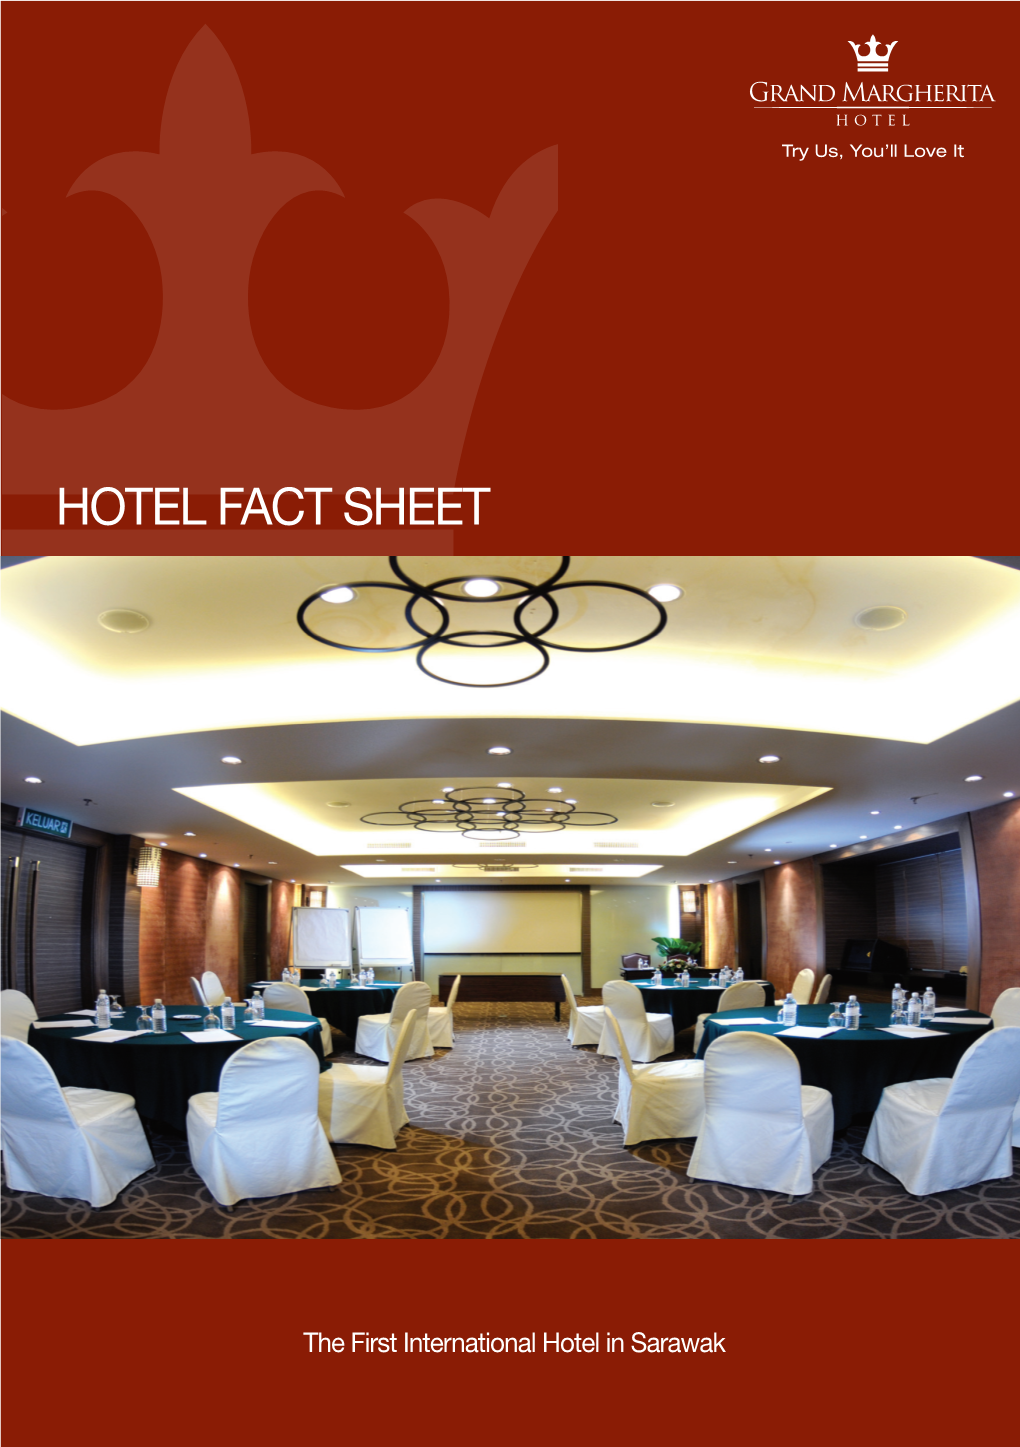 Grand Margherita Hotel Fact Sheet